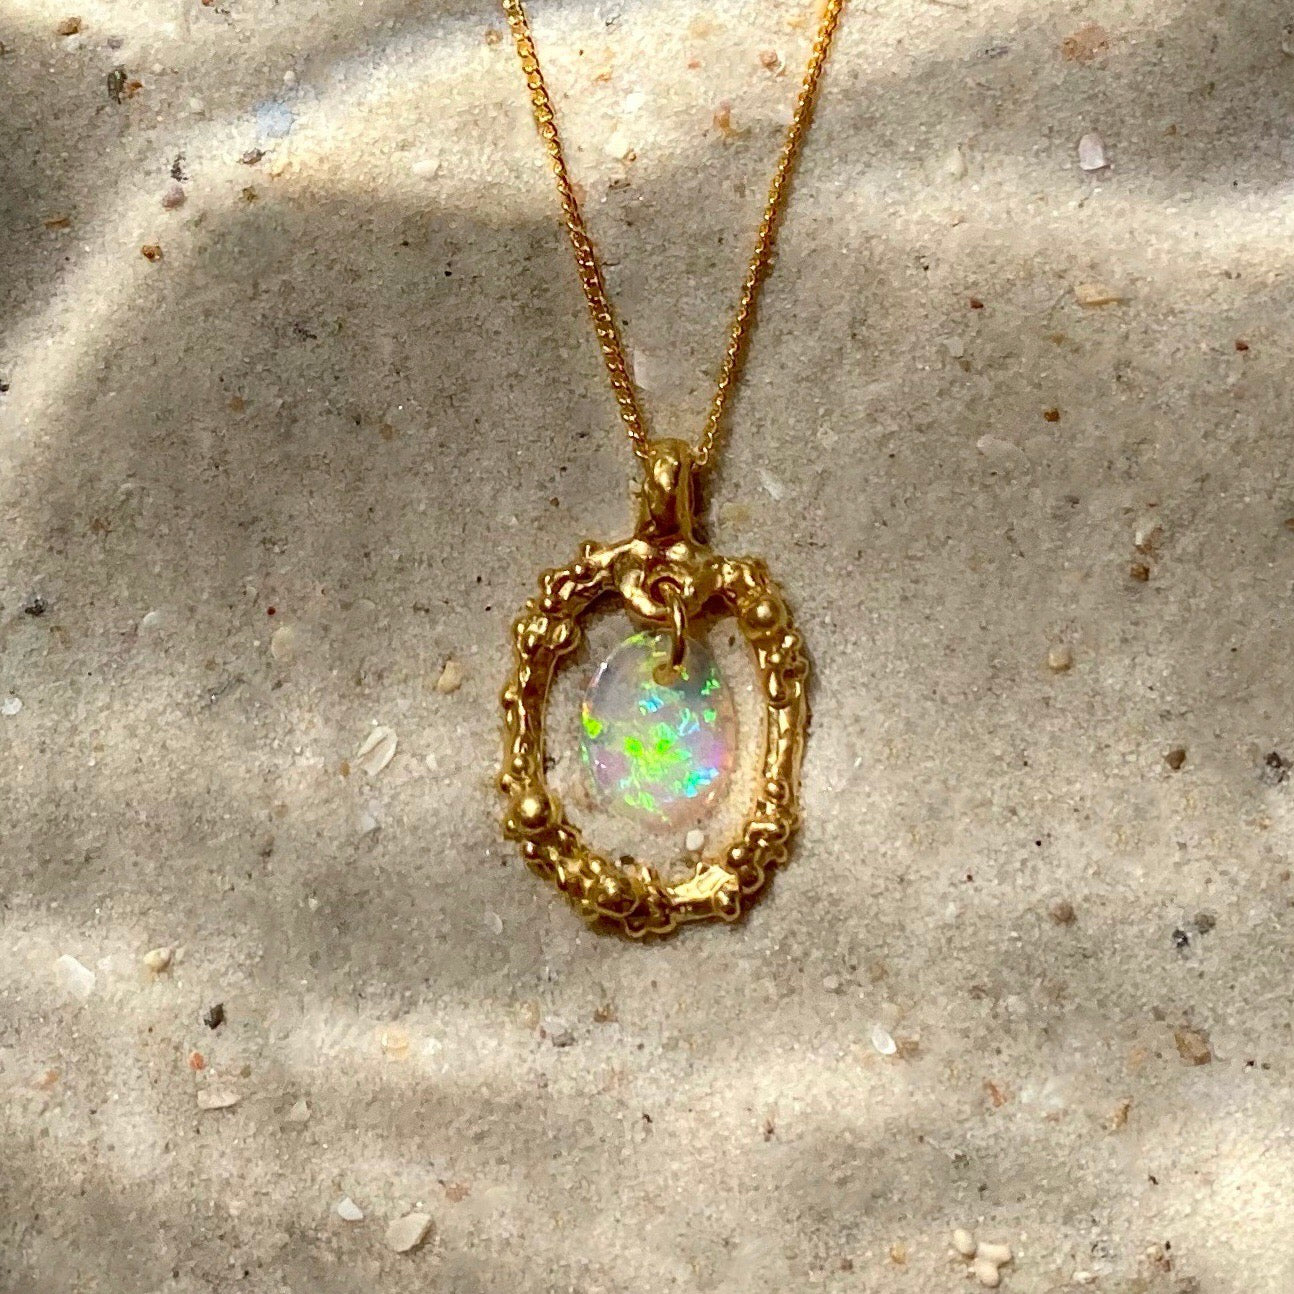 Ethiopian Opal necklace in 24k gold vermeil